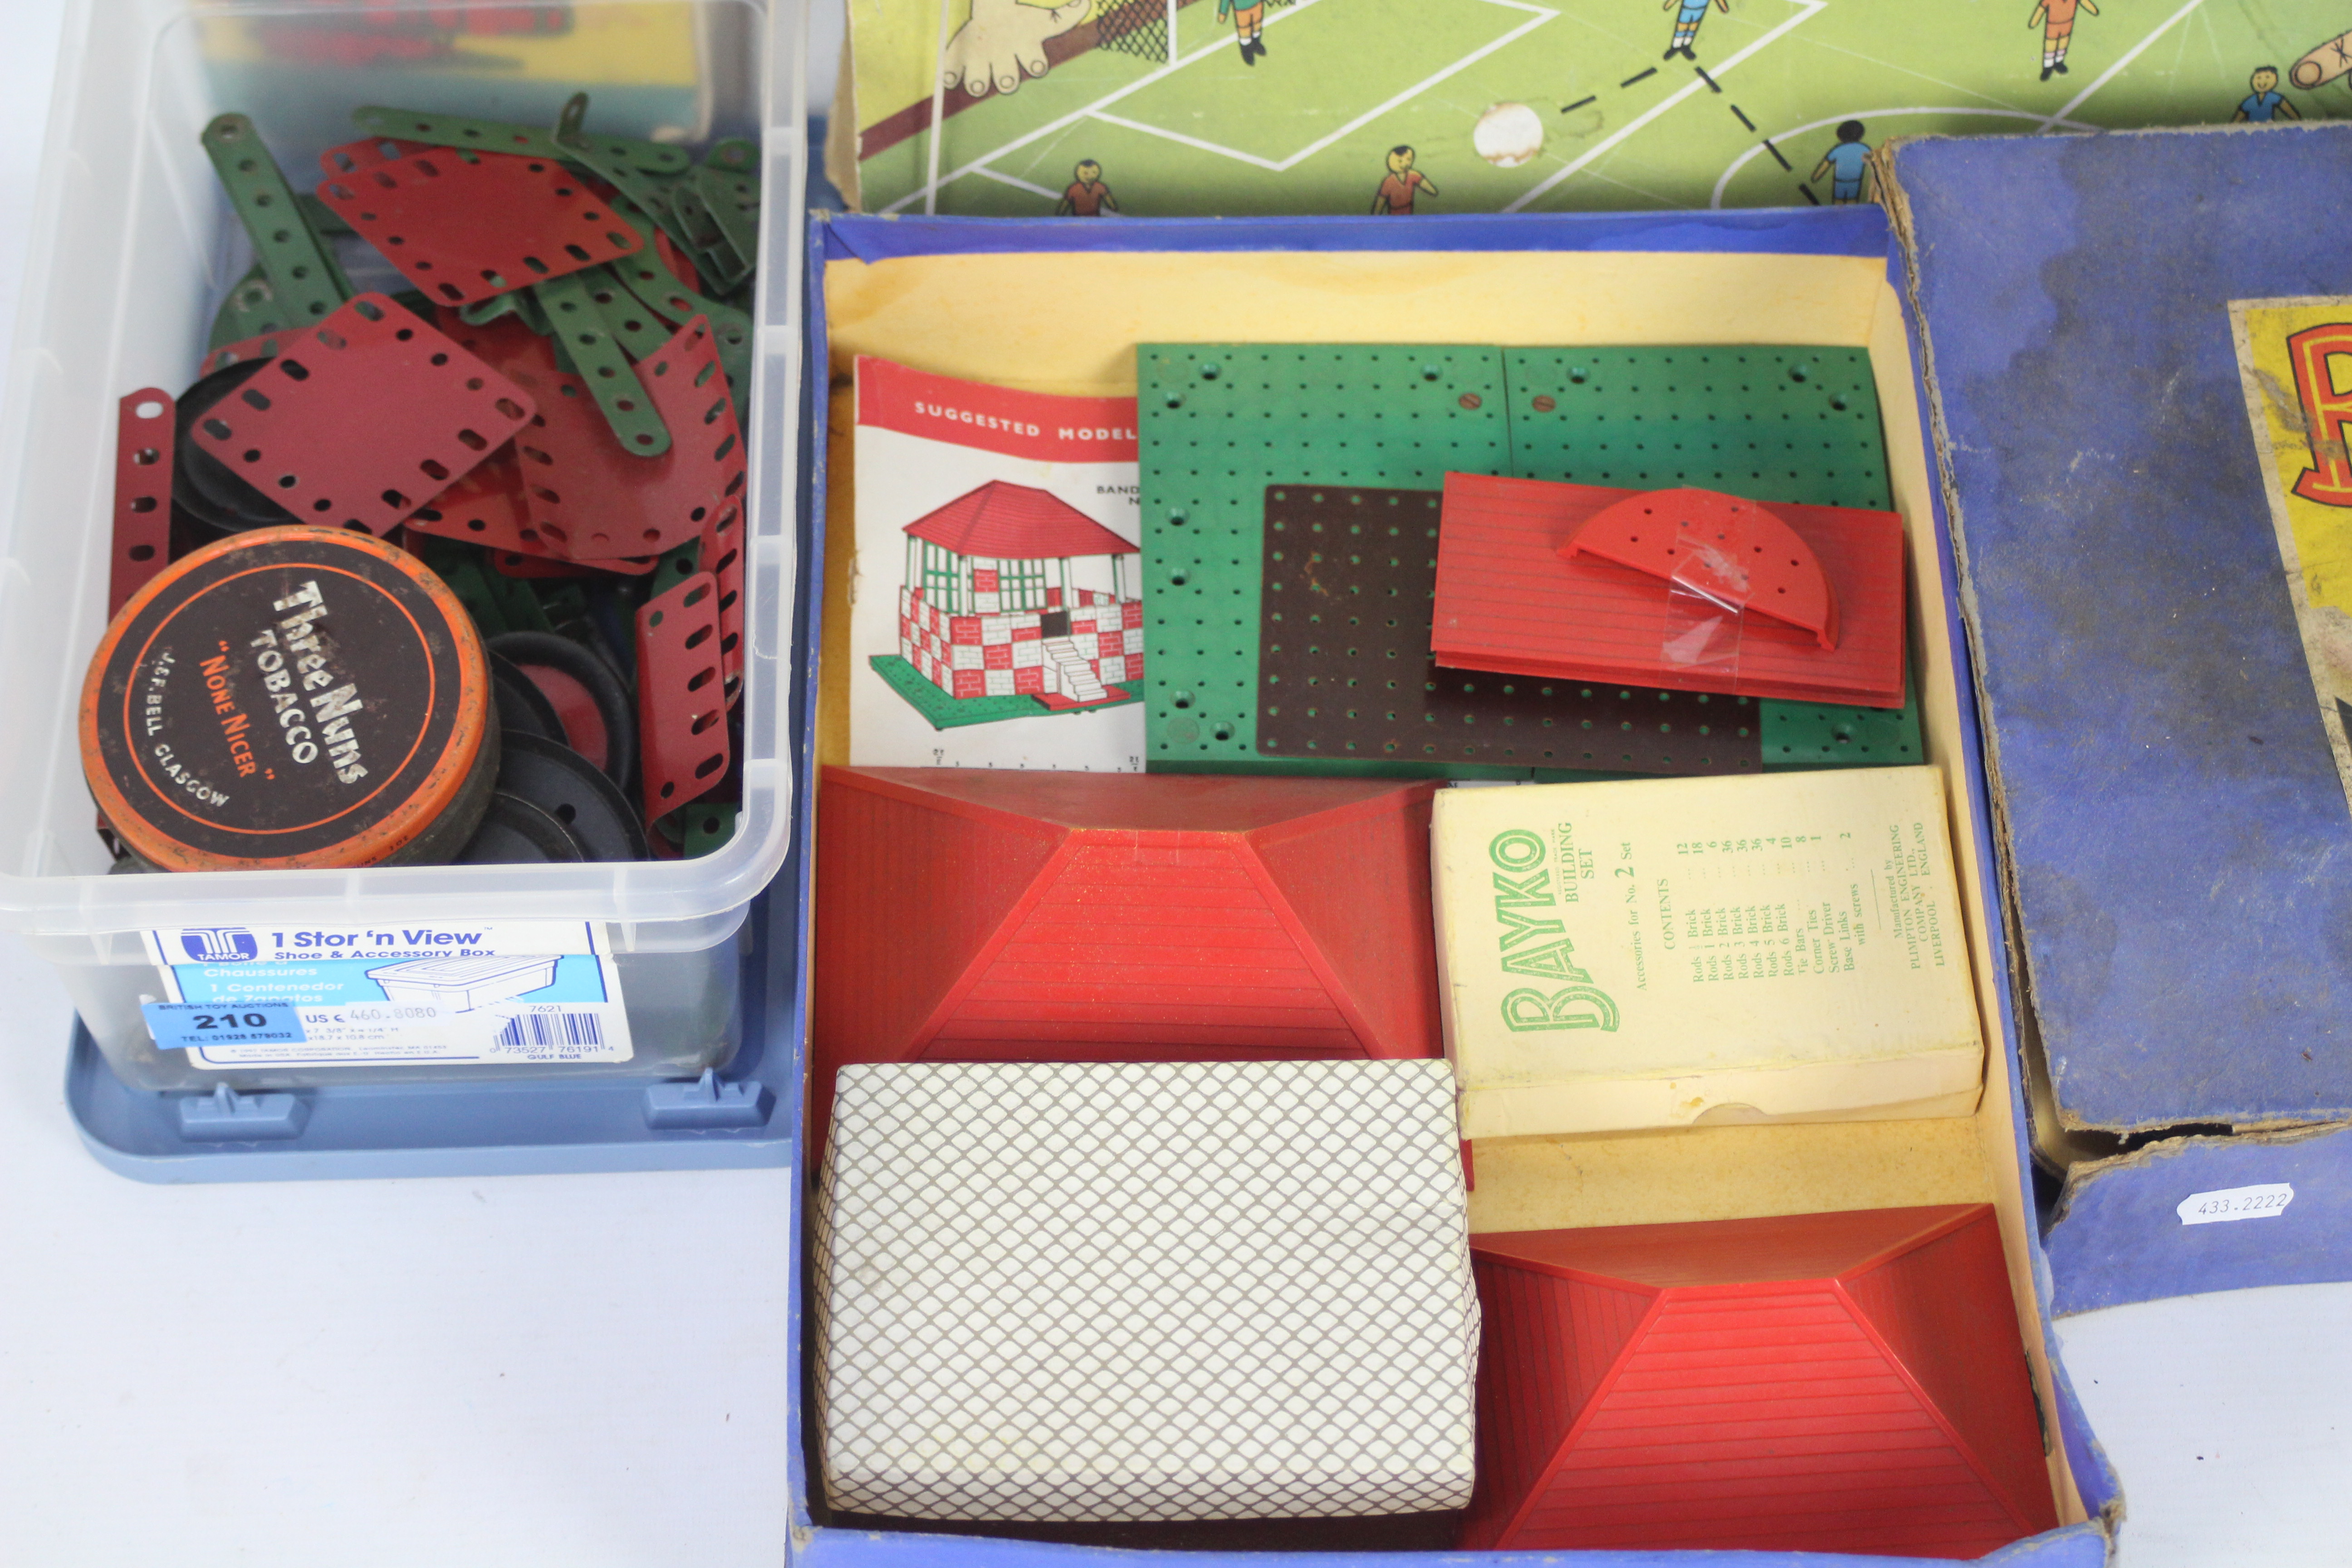 Bayko - Meccano - Relum - A collection of vintage toys, a boxed Bayko building set No. - Image 2 of 3